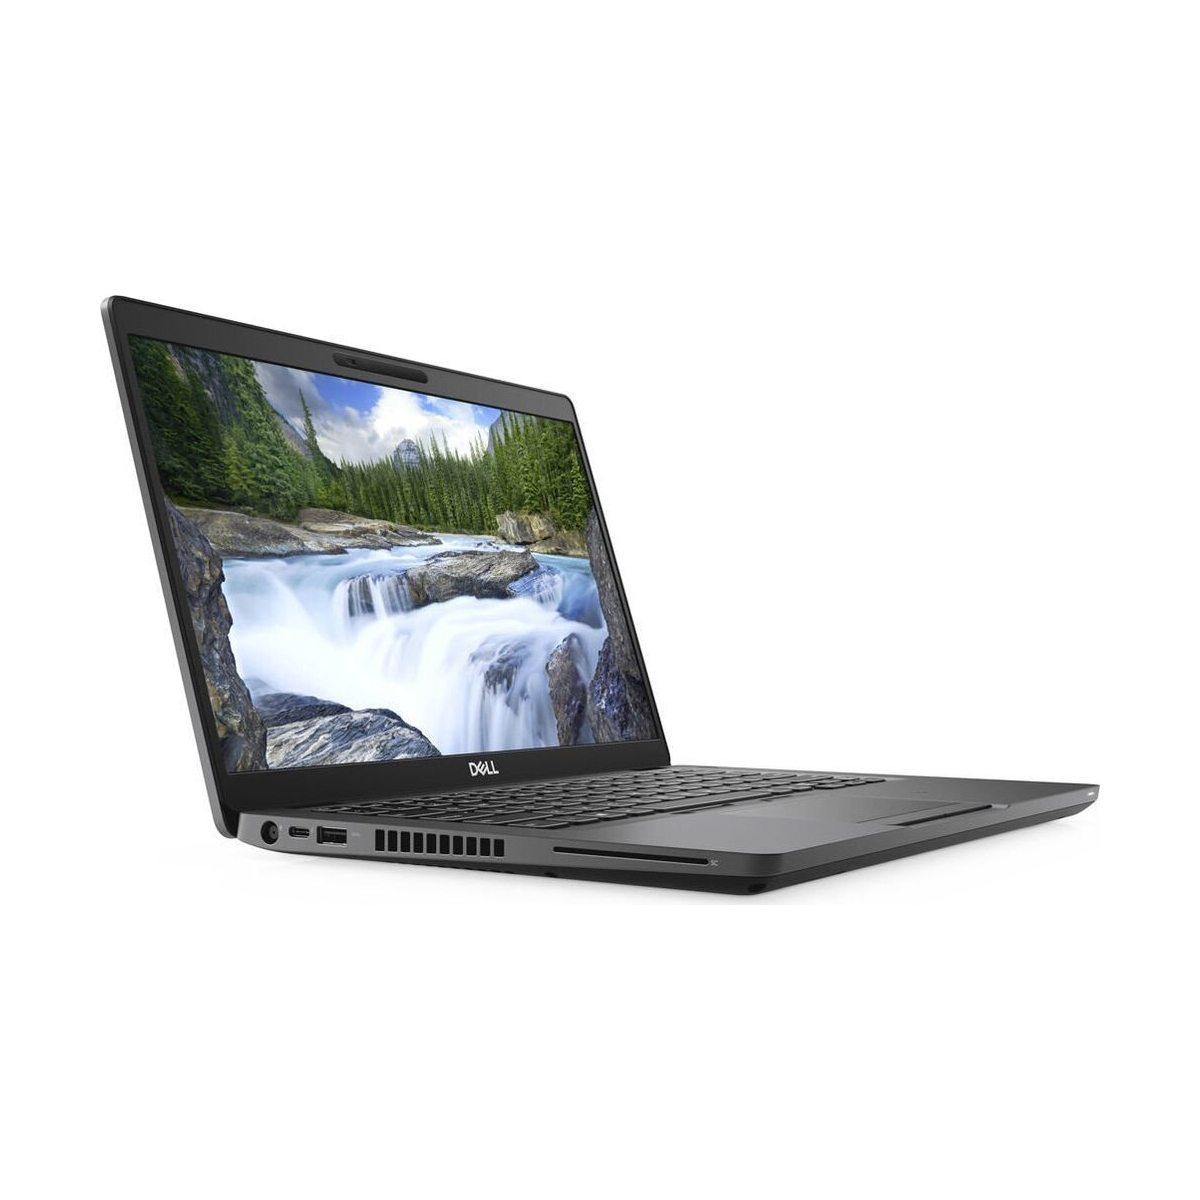 Dell E5400 - Business Laptop